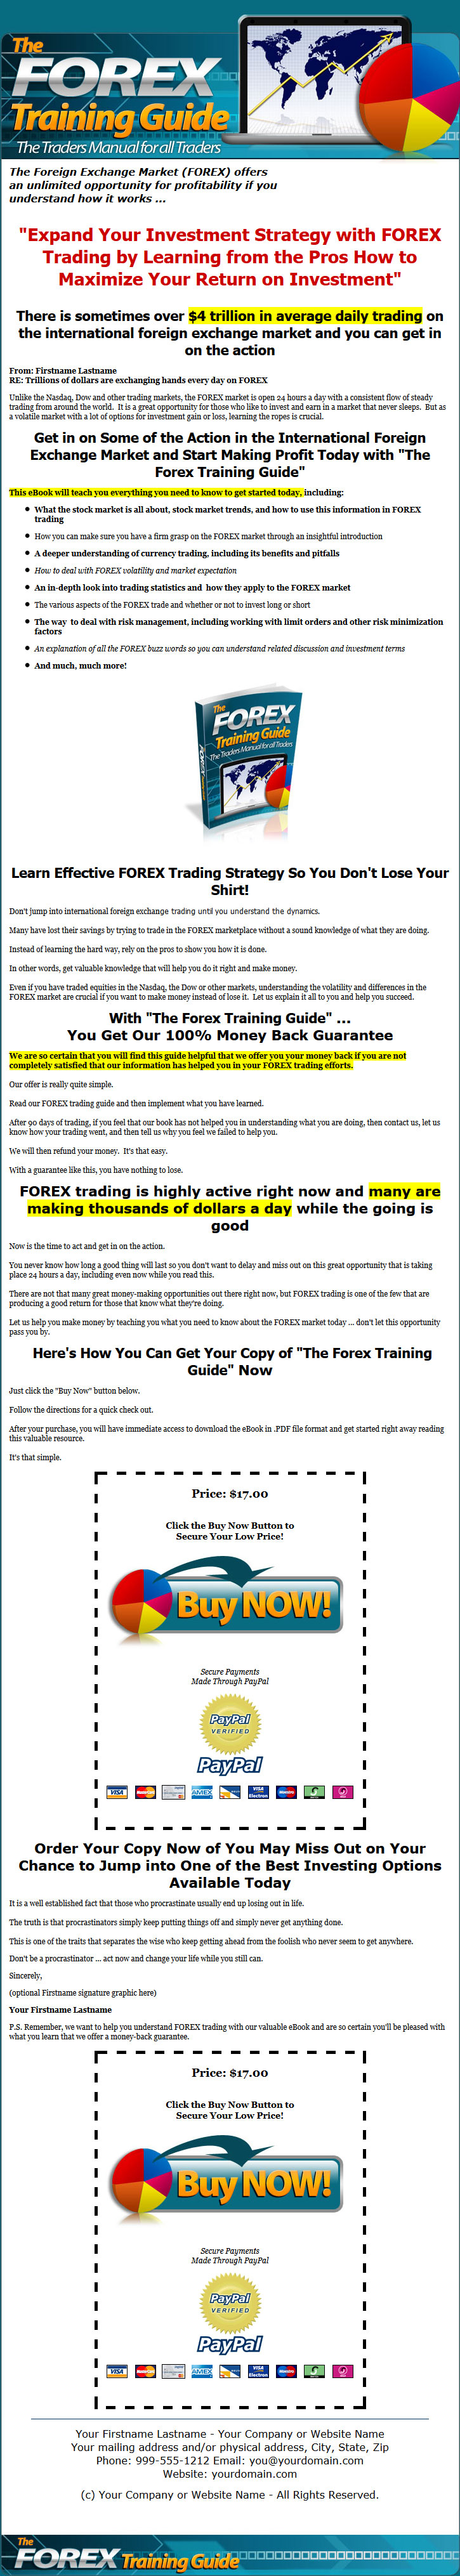 Forex trading training manual pdf